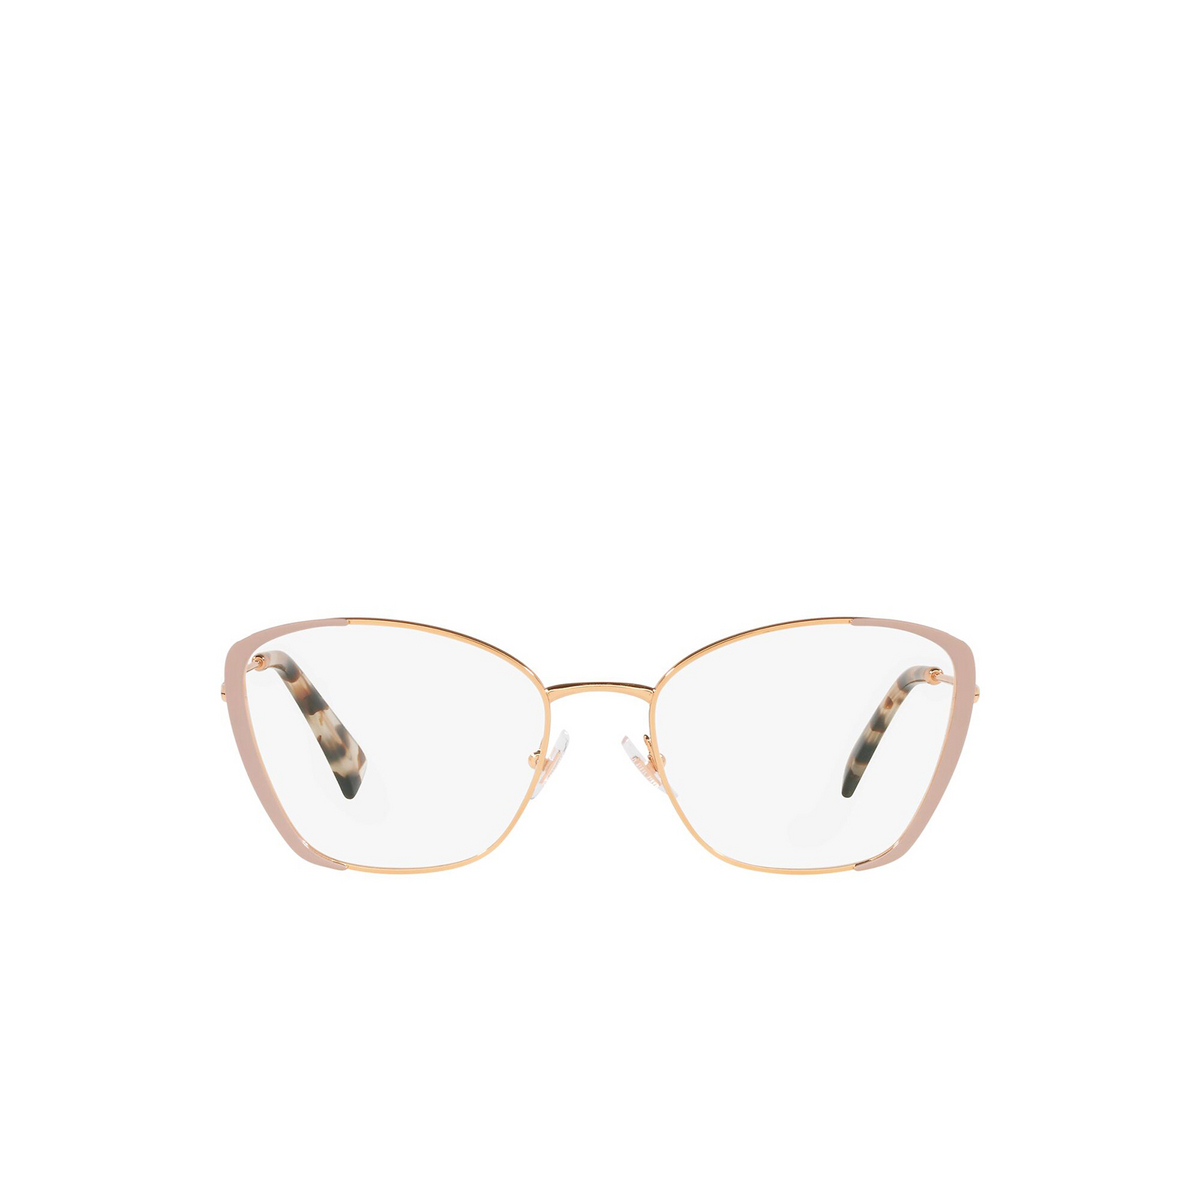 Miu Miu® Butterfly Eyeglasses: MU 51UV color Pink 08X1O1 - front view.